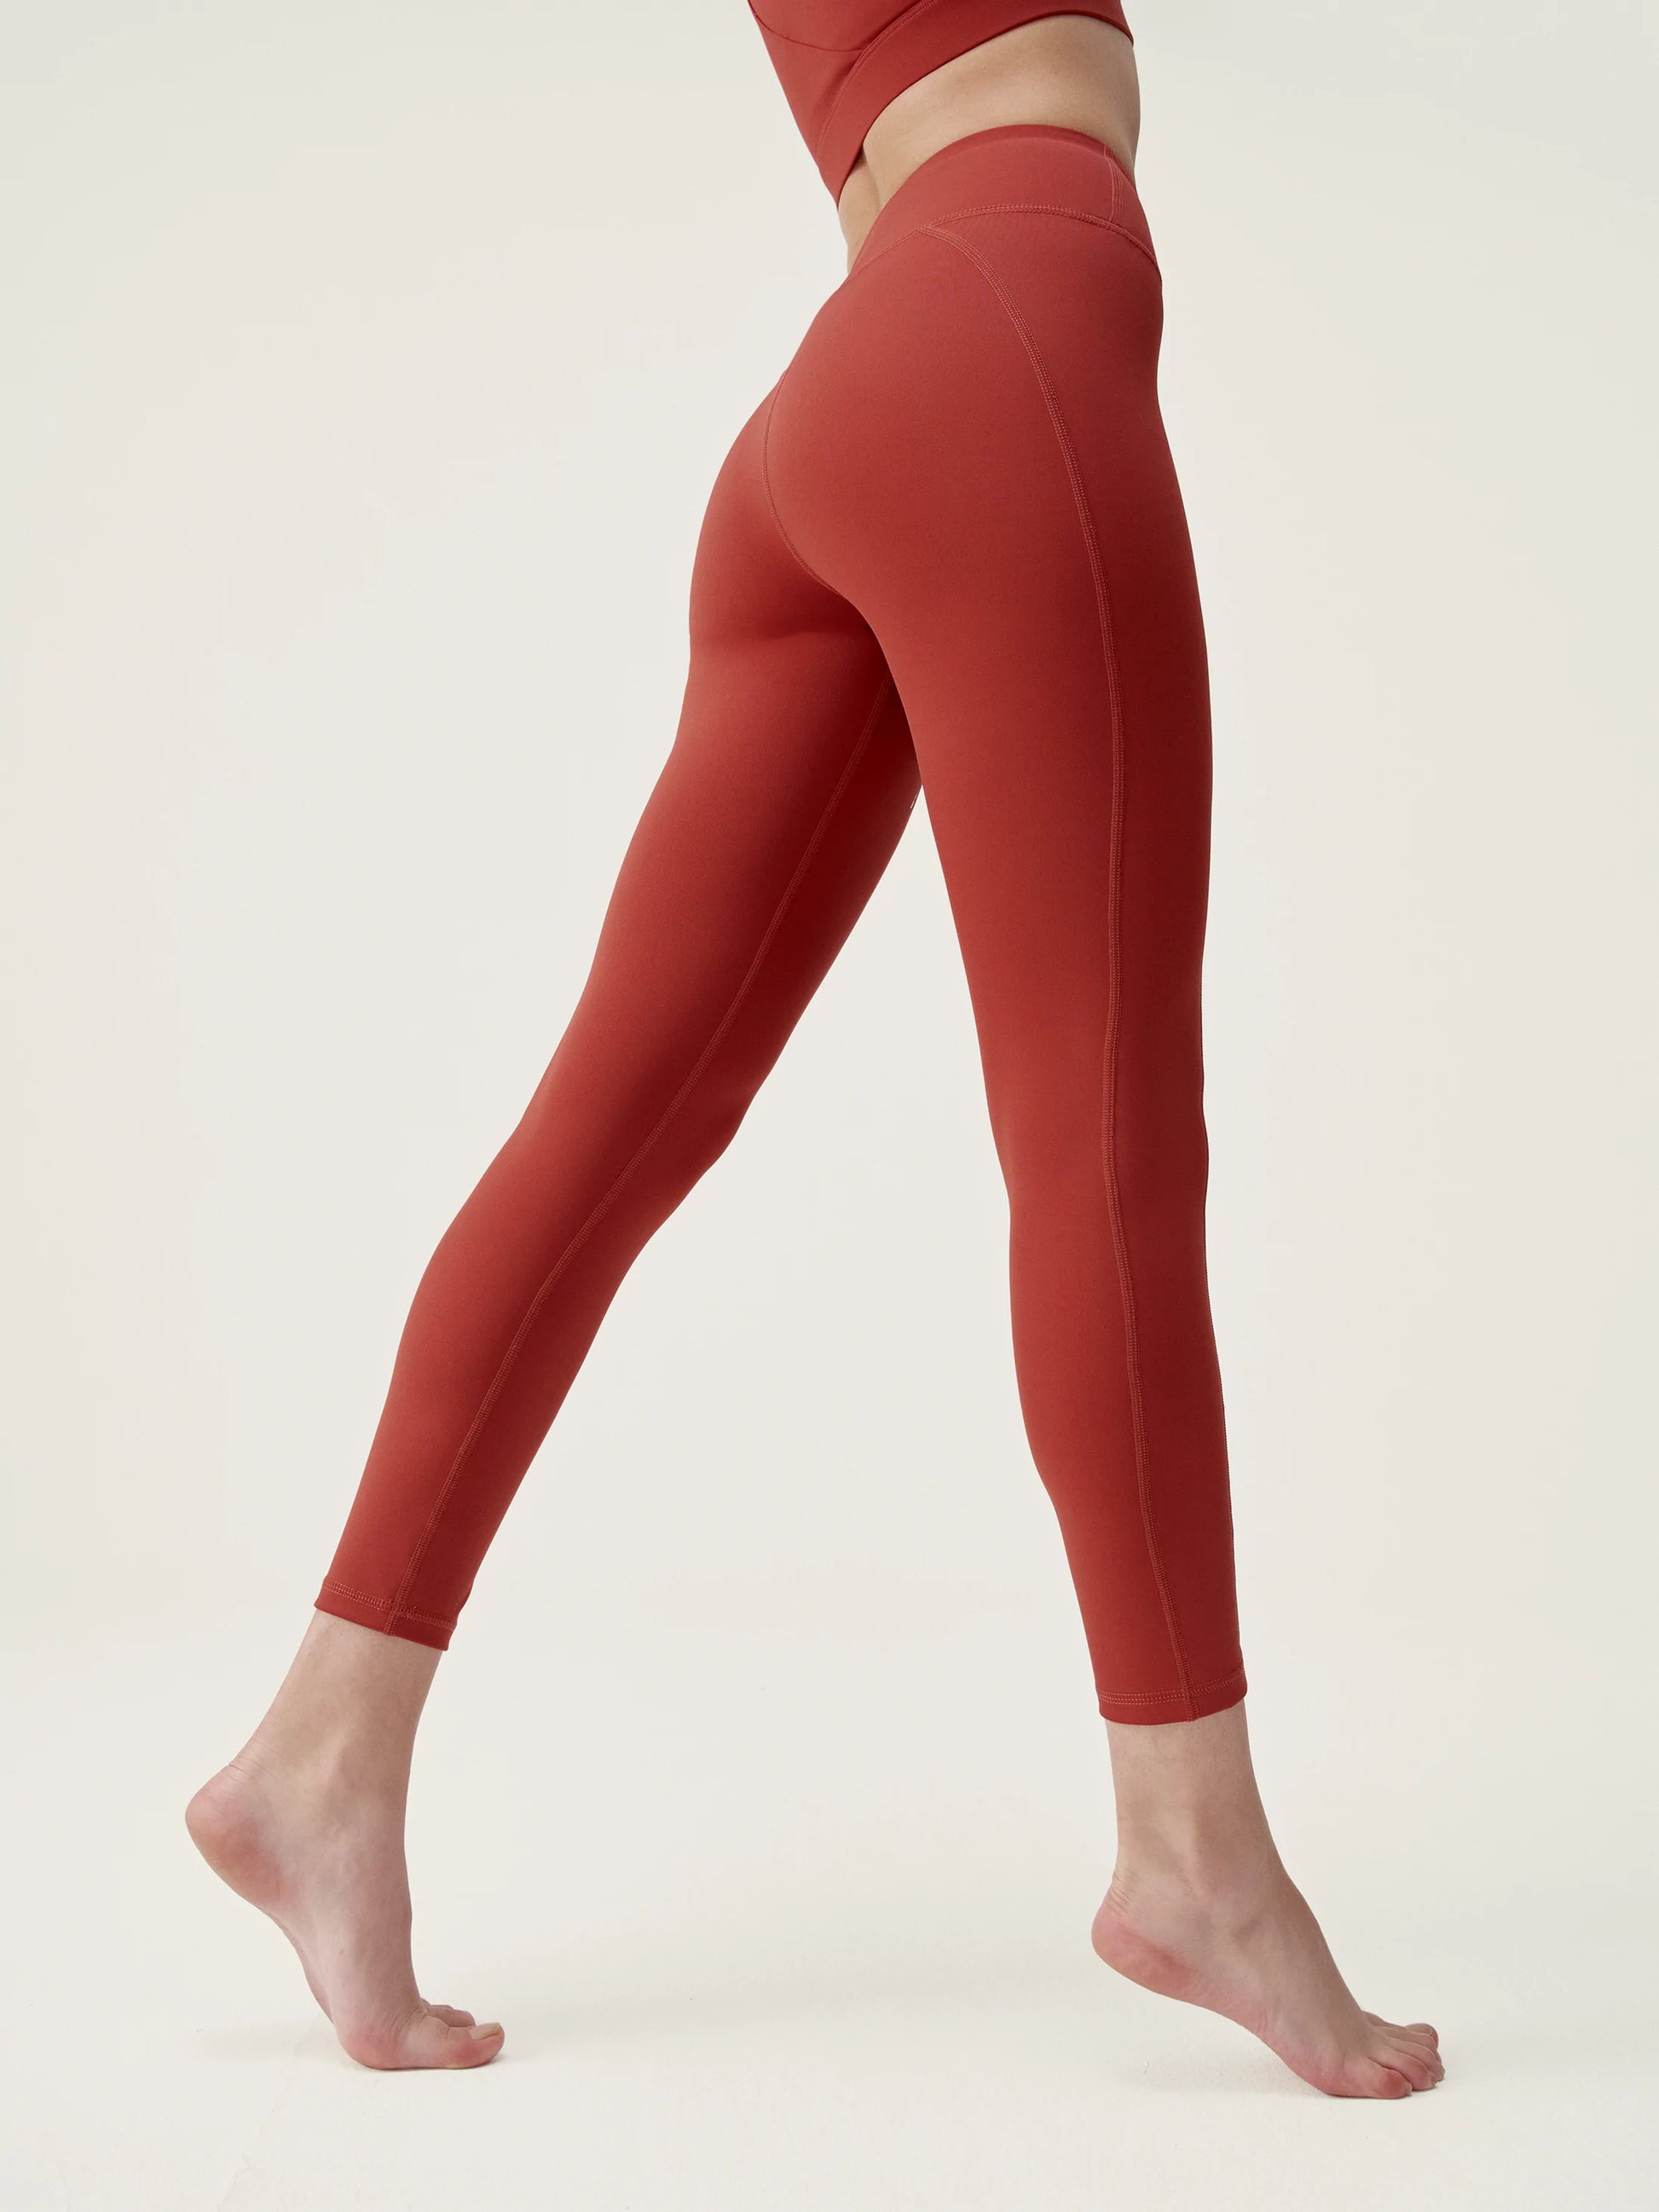 Legging GAIA yoga mujer, seamless, sostenible